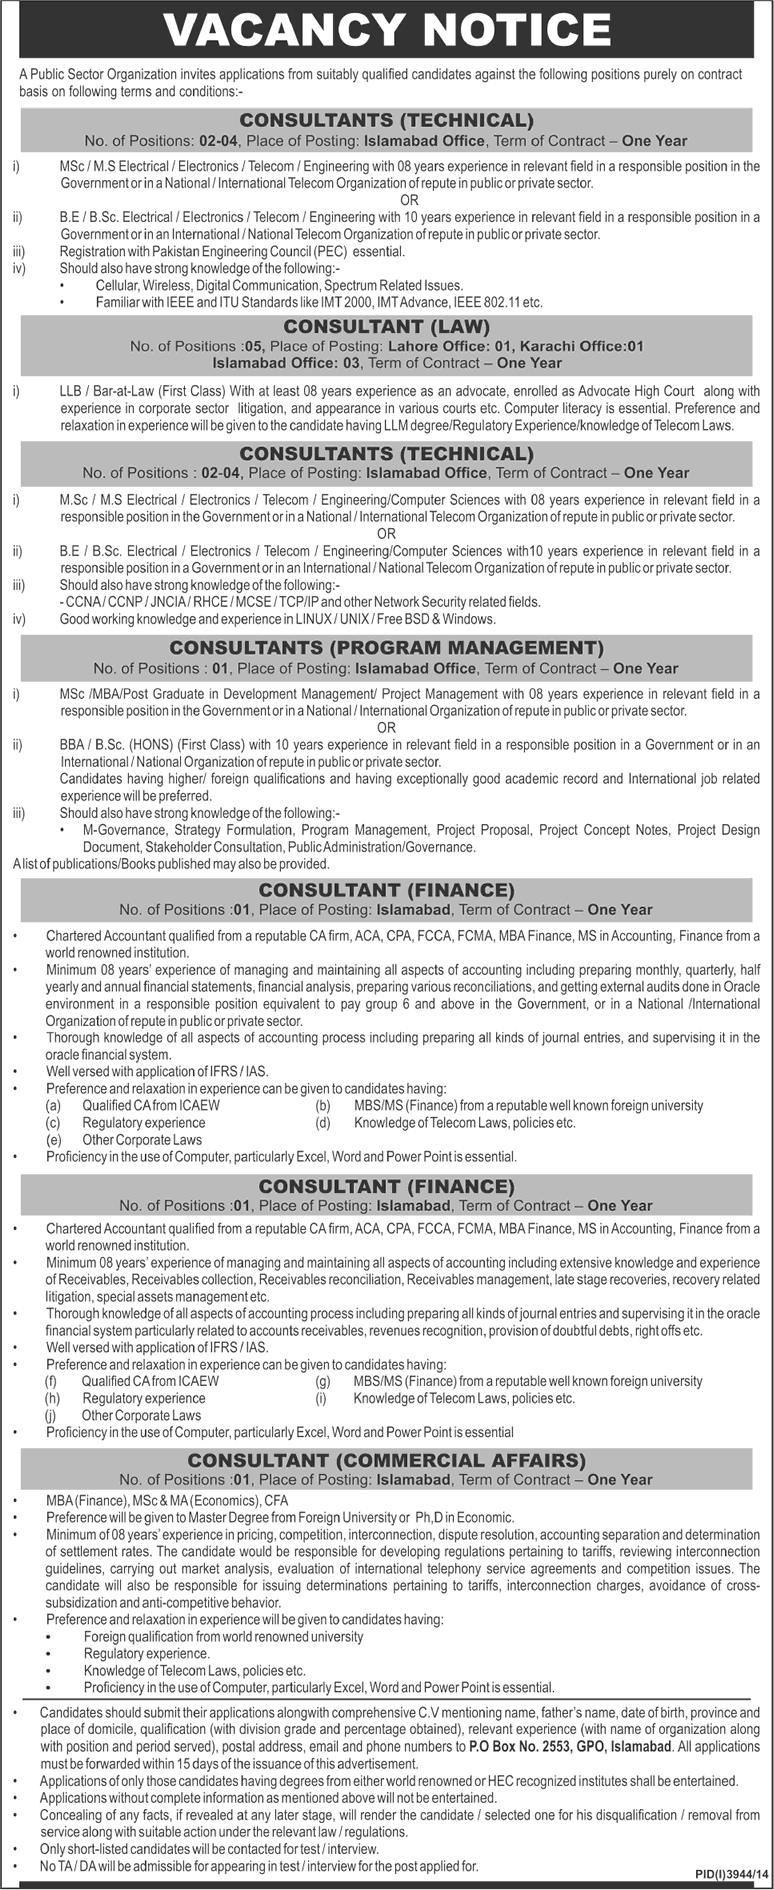 PO Box 2553 Islamabad Jobs 2015 February Consultants in Public Sector Organization